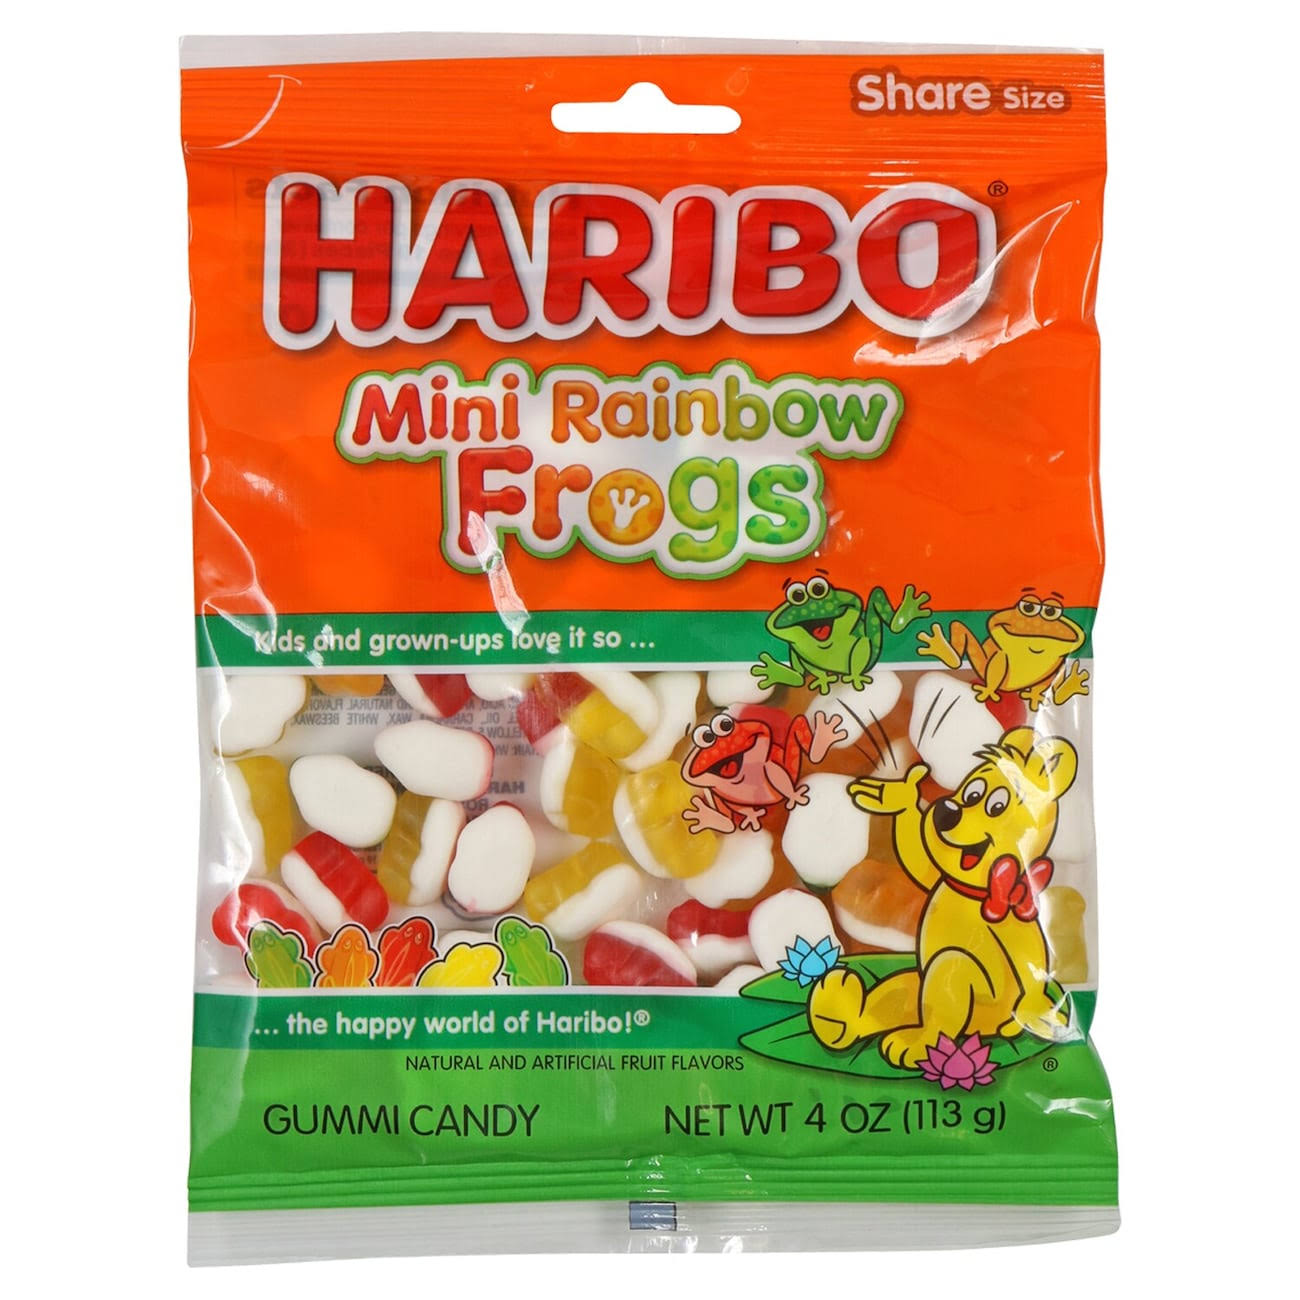 Haribo Mini Rainbow Frogs Gummi Candies - 4 oz